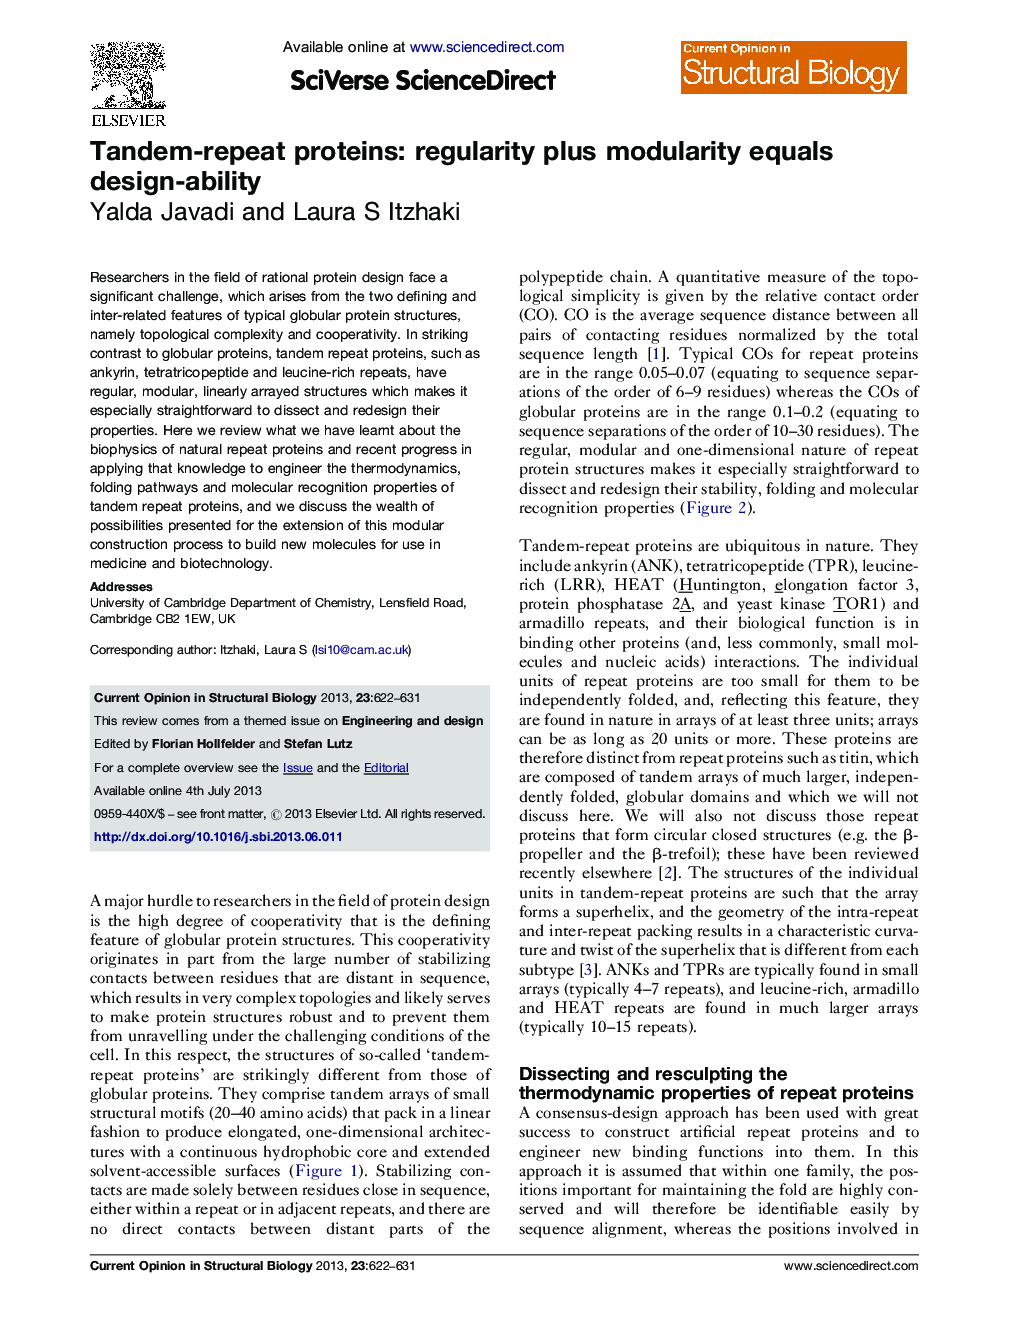 Tandem-repeat proteins: regularity plus modularity equals design-ability